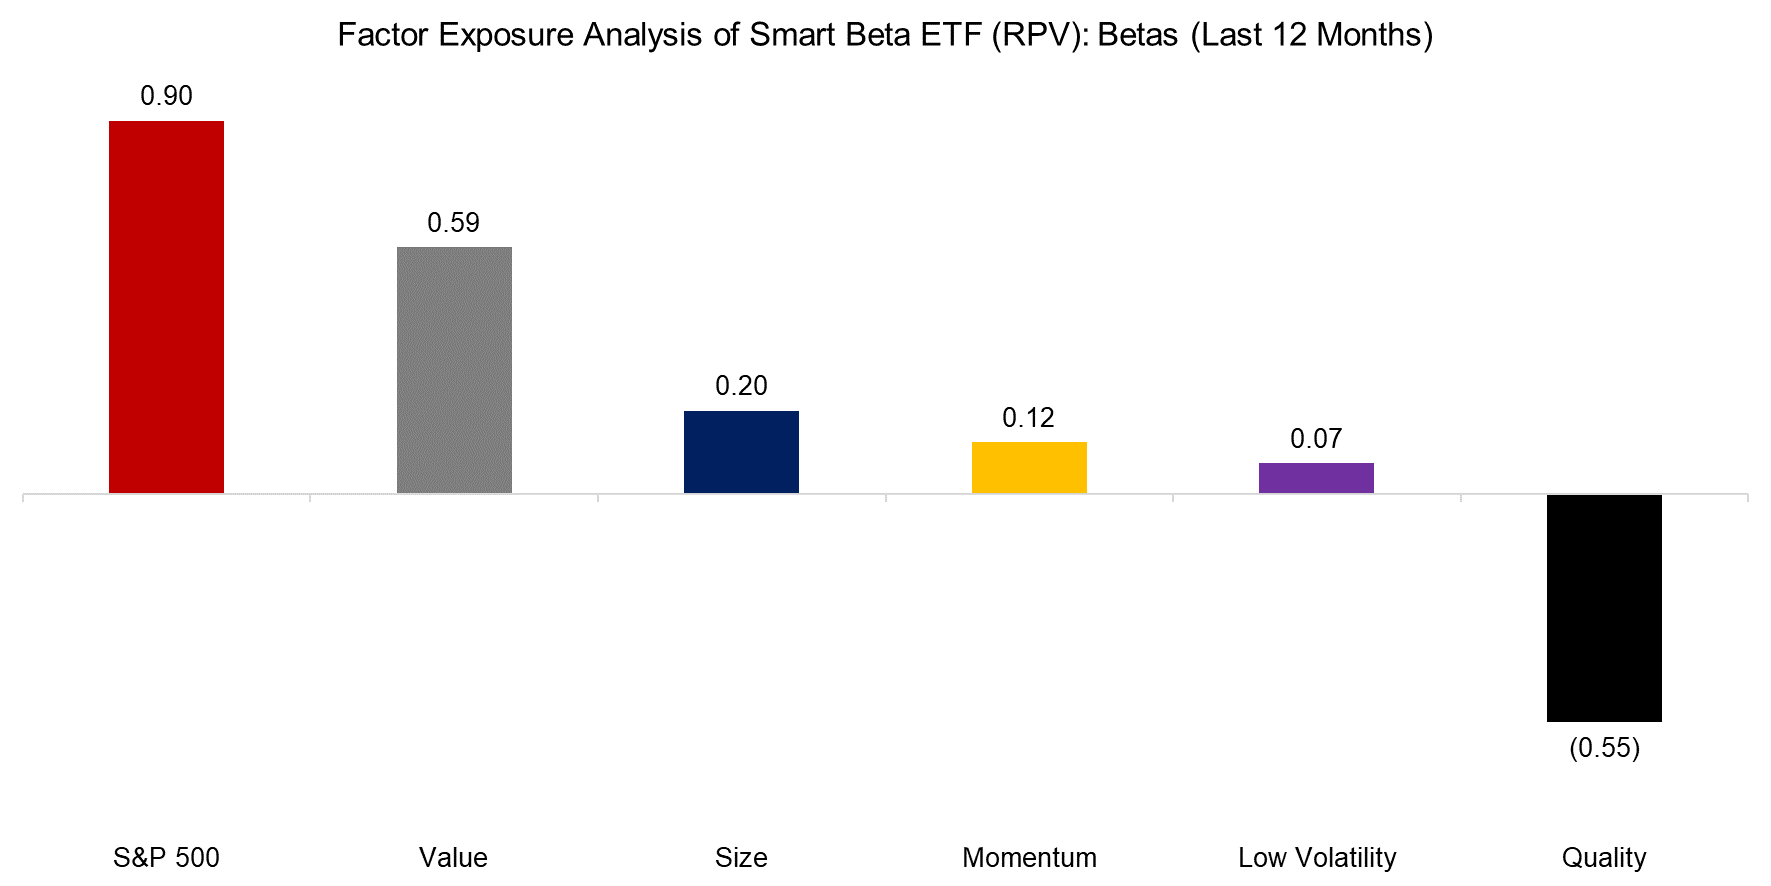 Factor Exposure Analysis of Smart Beta ETF (RPV) Betas (Last 12 Months)